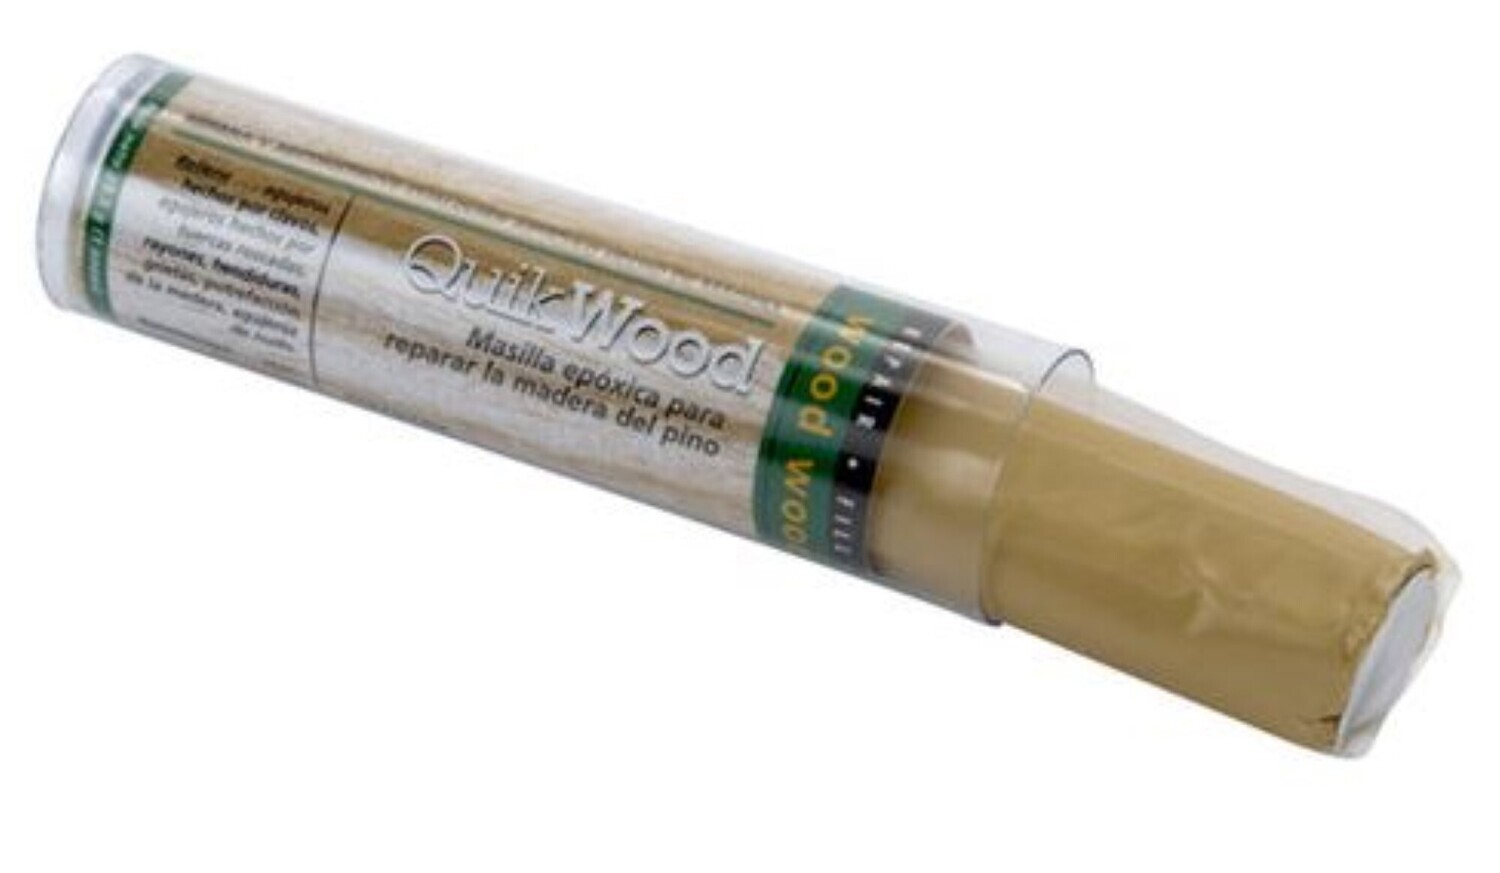 (LIMITED STOCK) - PINE Quickwood - Epoxy Wood Repair Putty - 1 oz tube filler bond log dent scratch scrape hole gash wood oak walnut ash birch